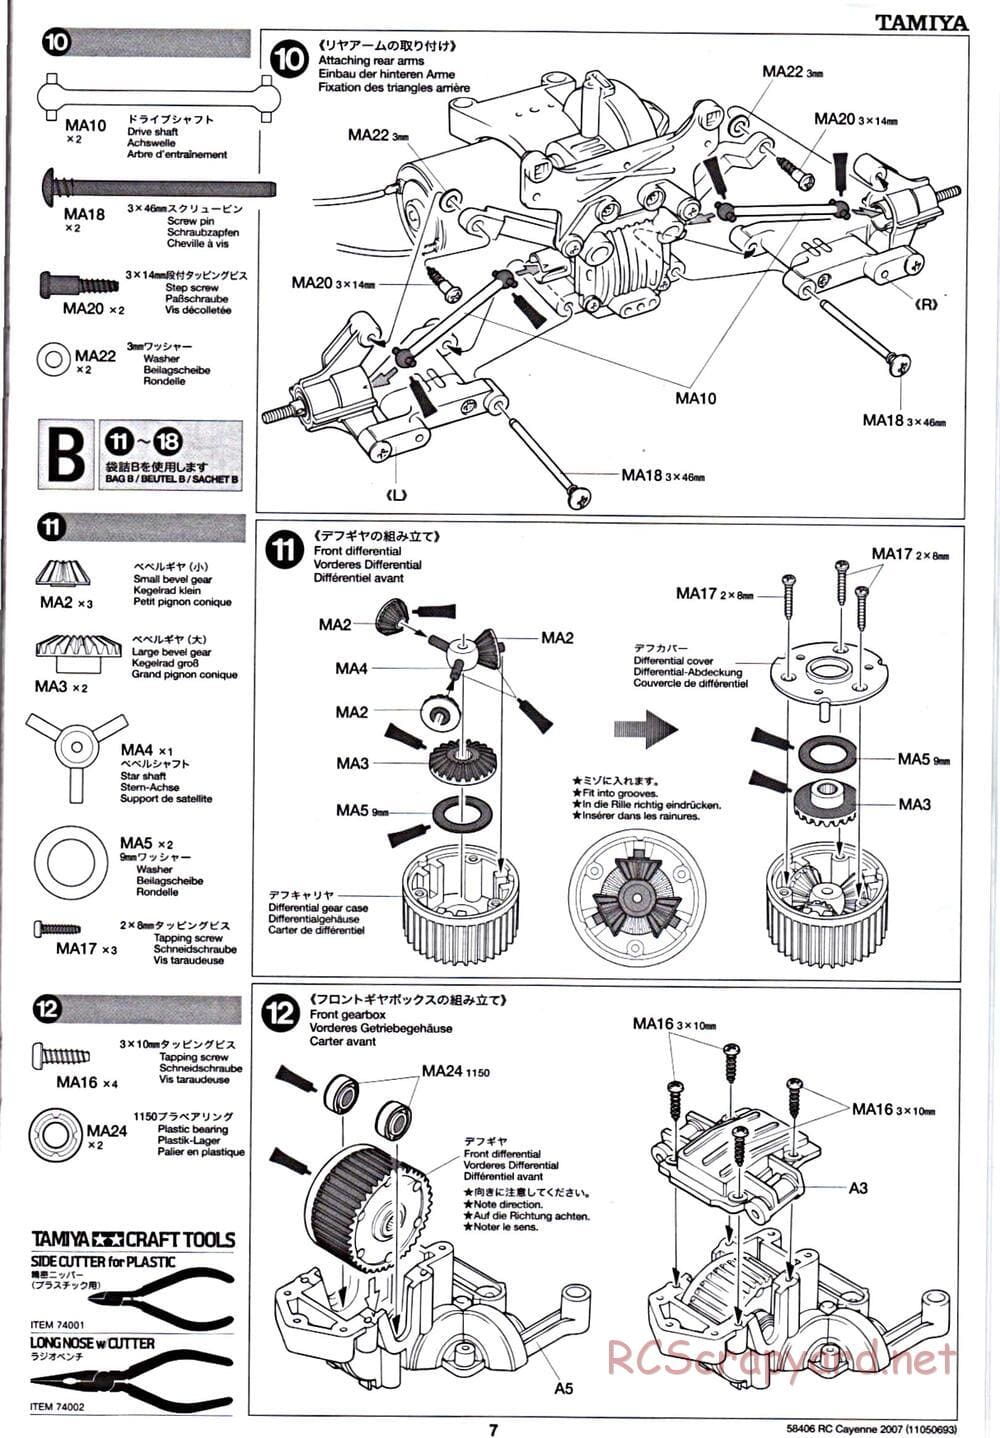 Tamiya - Cayenne S Transsyberia 2007 Chassis - Manual - Page 7